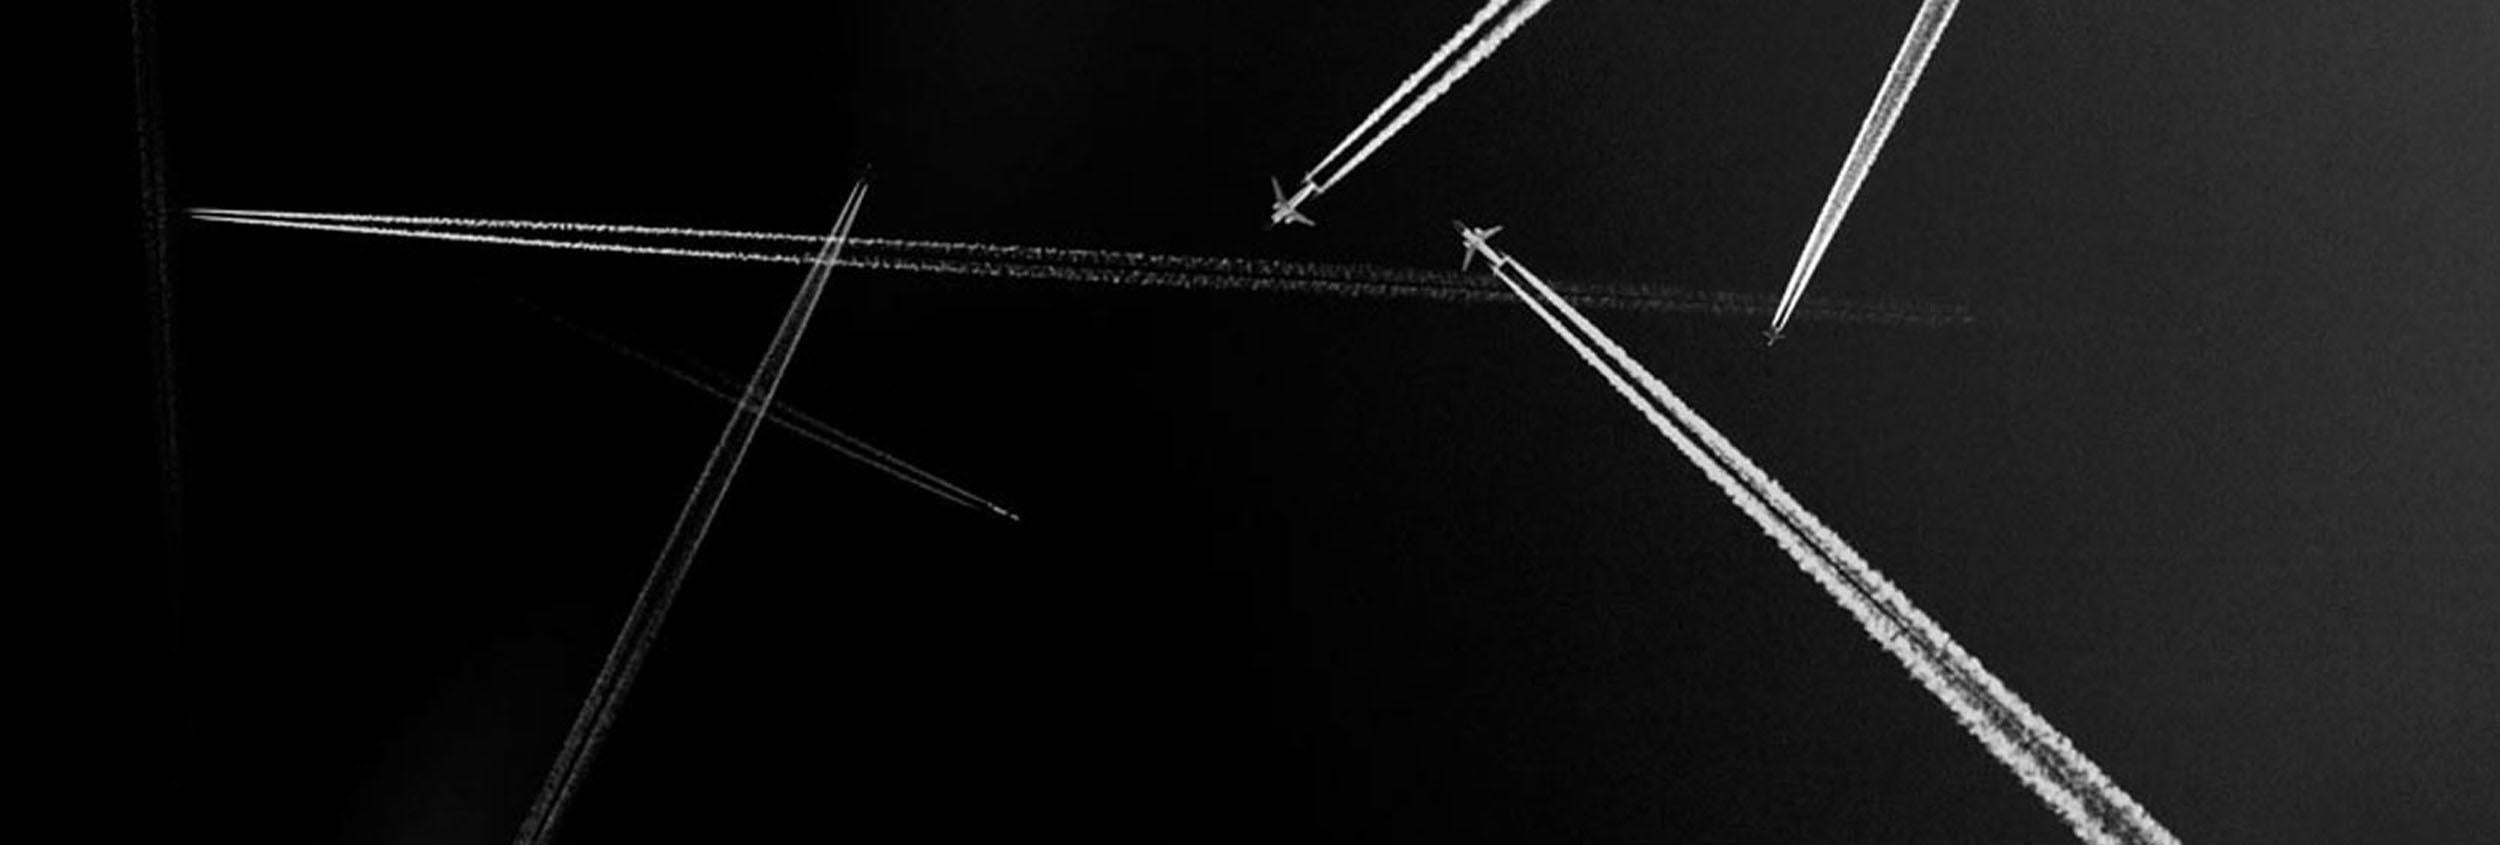 Flight II, skyscape, aeroplane art - Contemporary Photograph by Tom Sullam